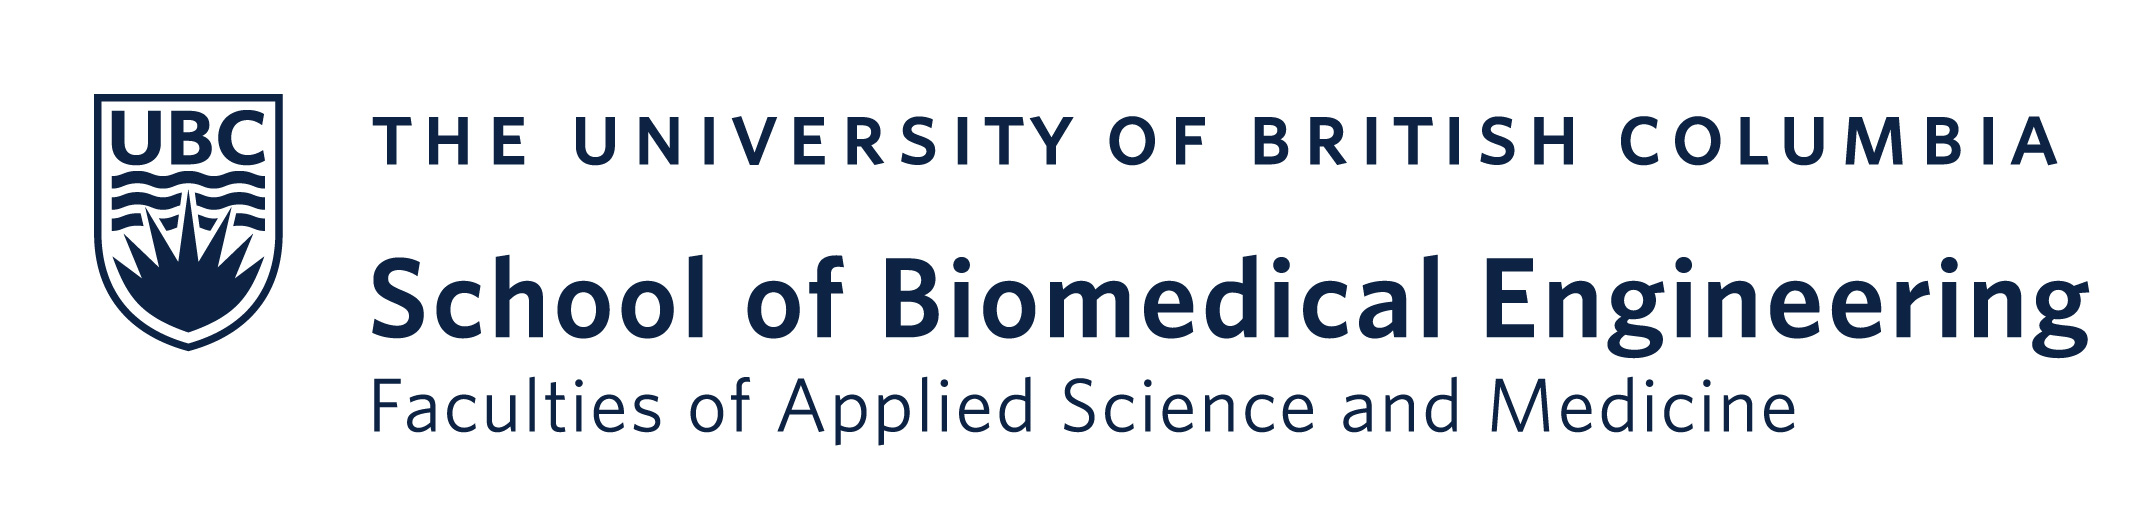 UBC School of Biomedical Engineering